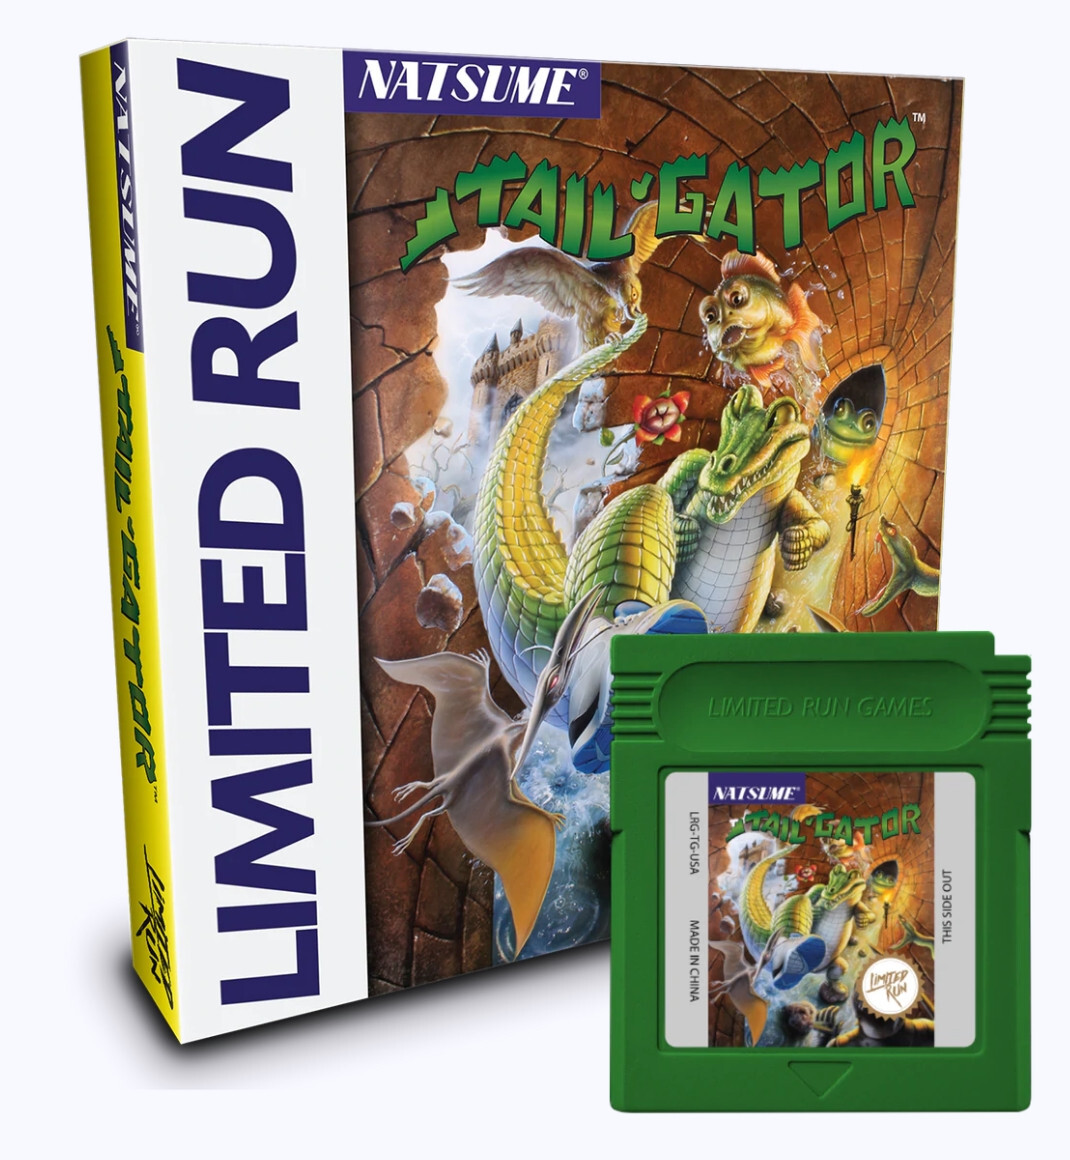 Limited Run Tail-Gator Games) Gameboy